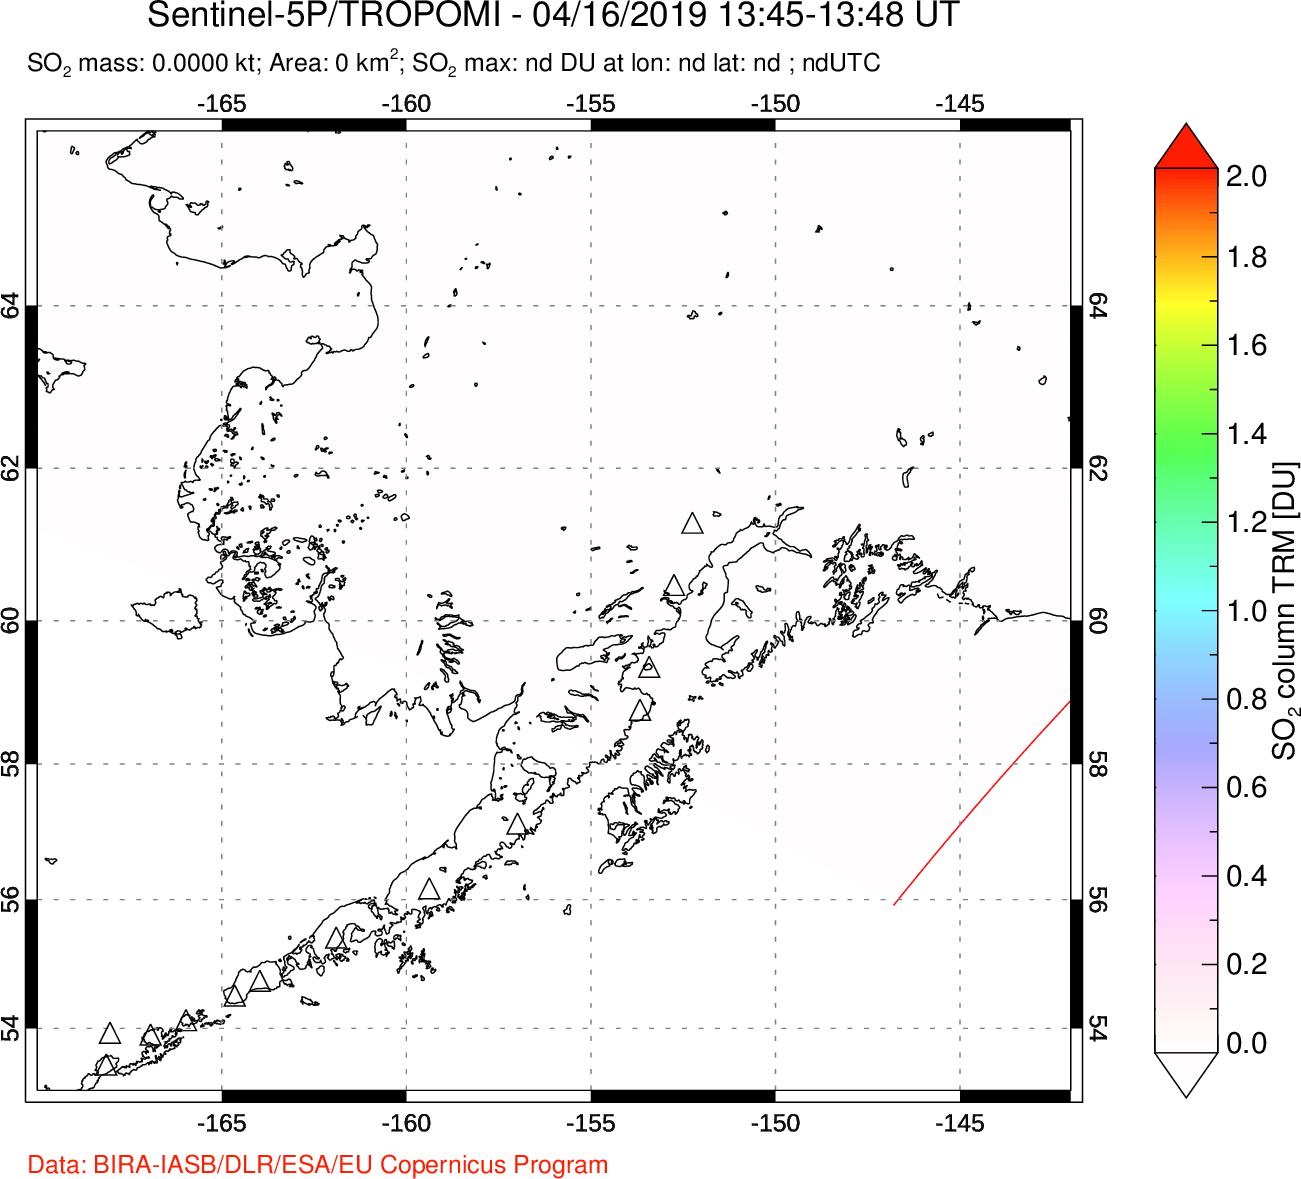 A sulfur dioxide image over Alaska, USA on Apr 16, 2019.